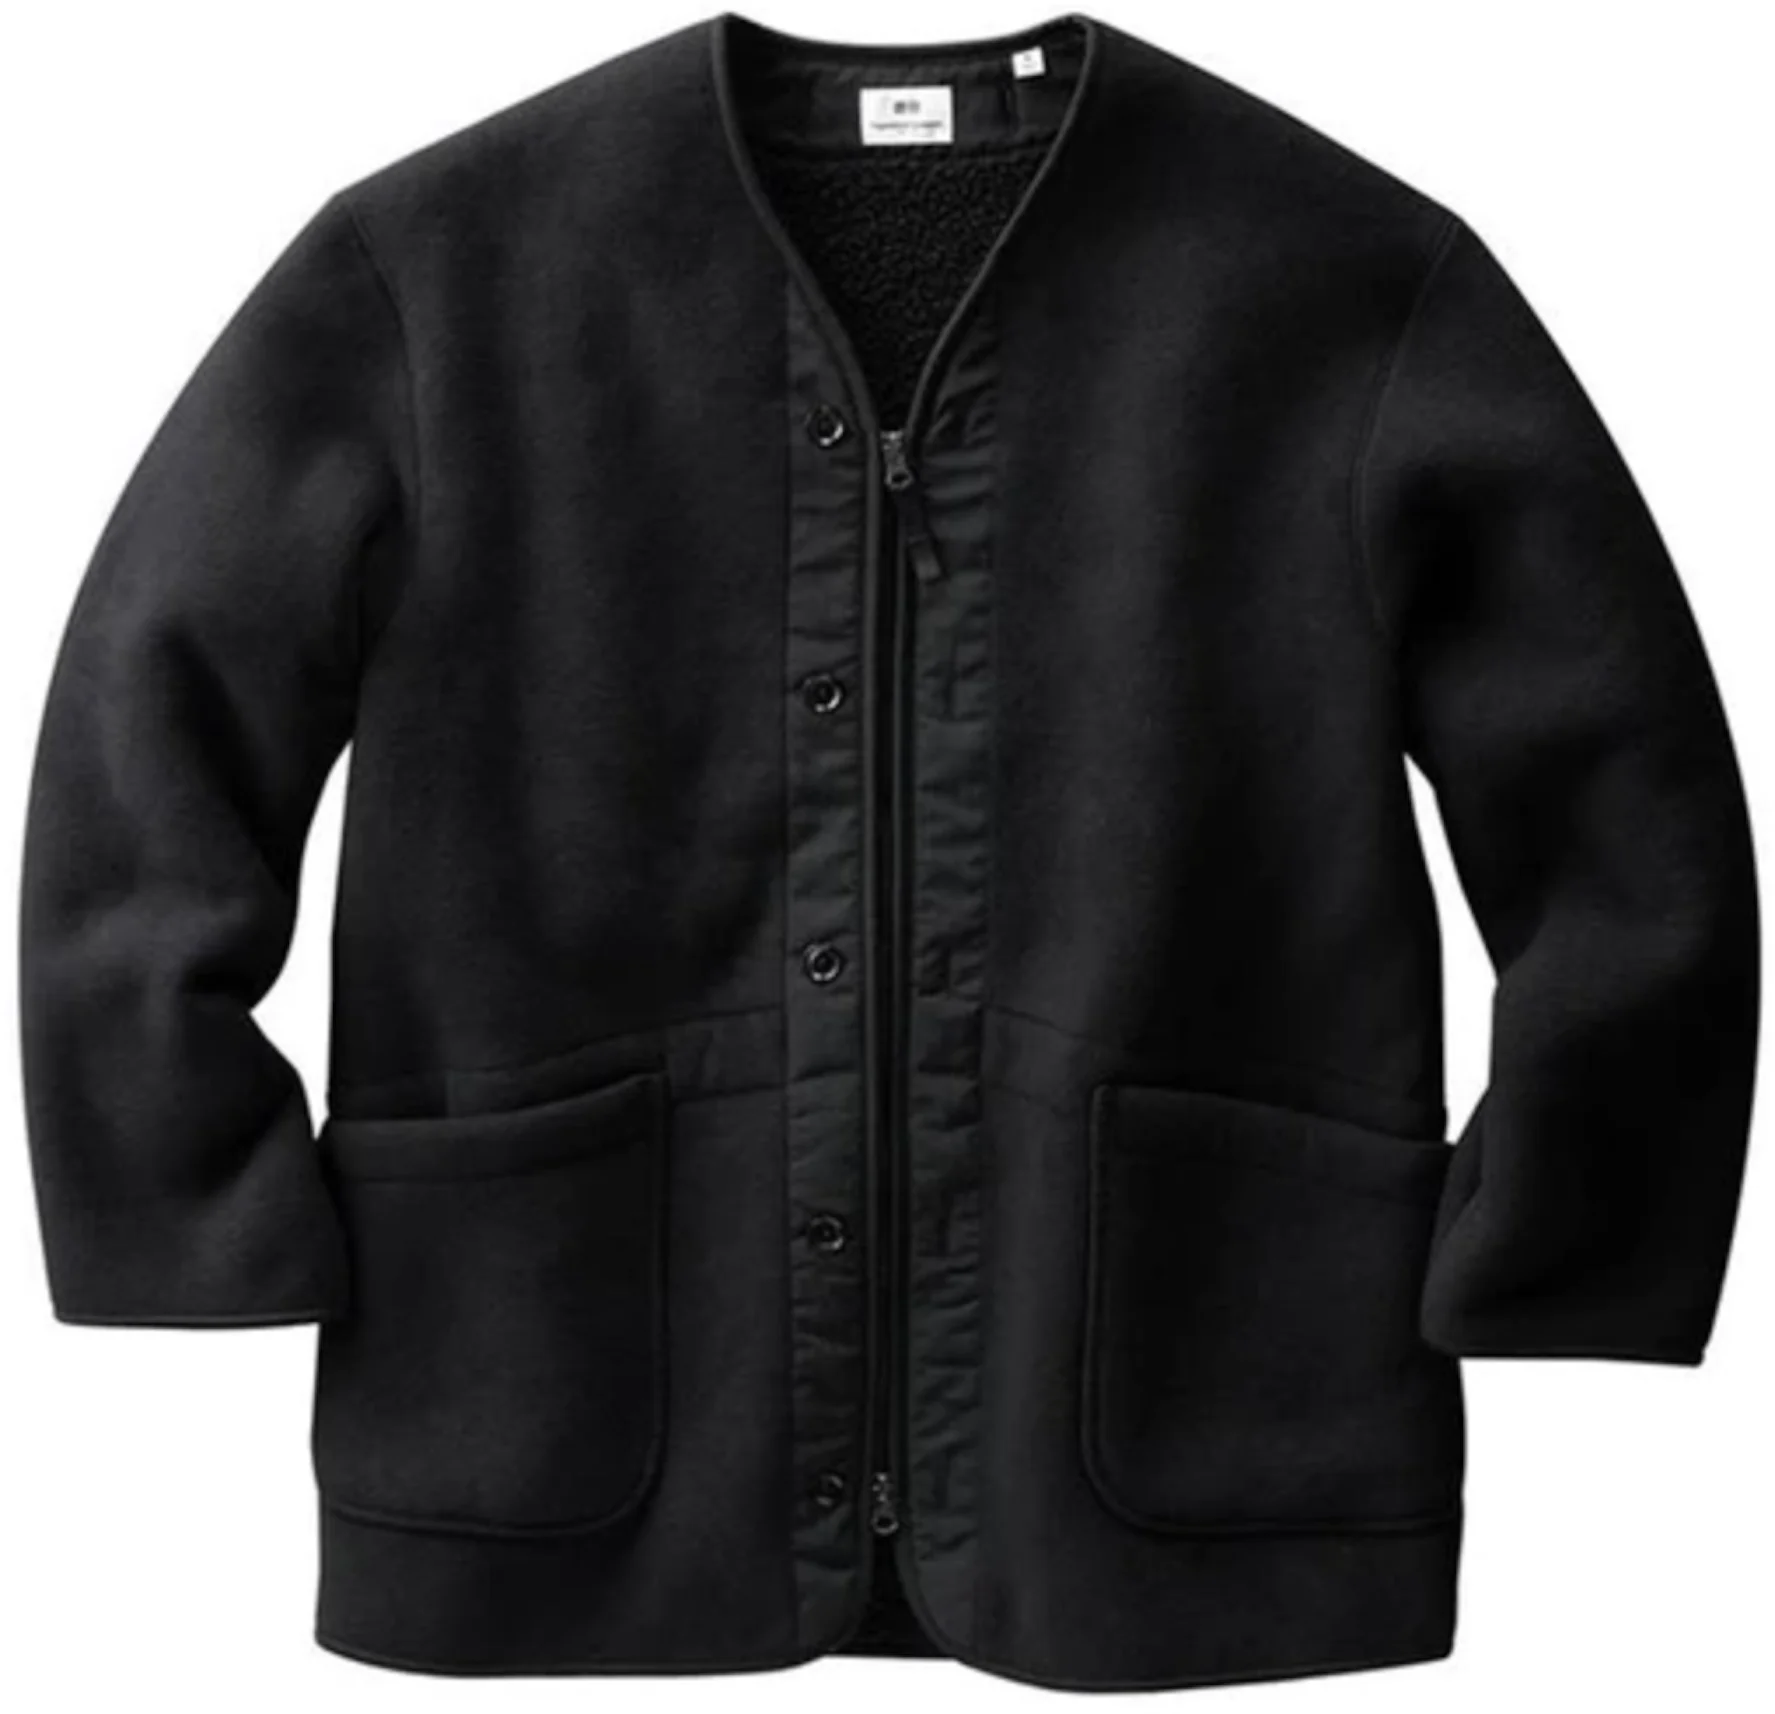 Uniqlo x Engineered Garments Fleece Collarless Coat (Japanese 